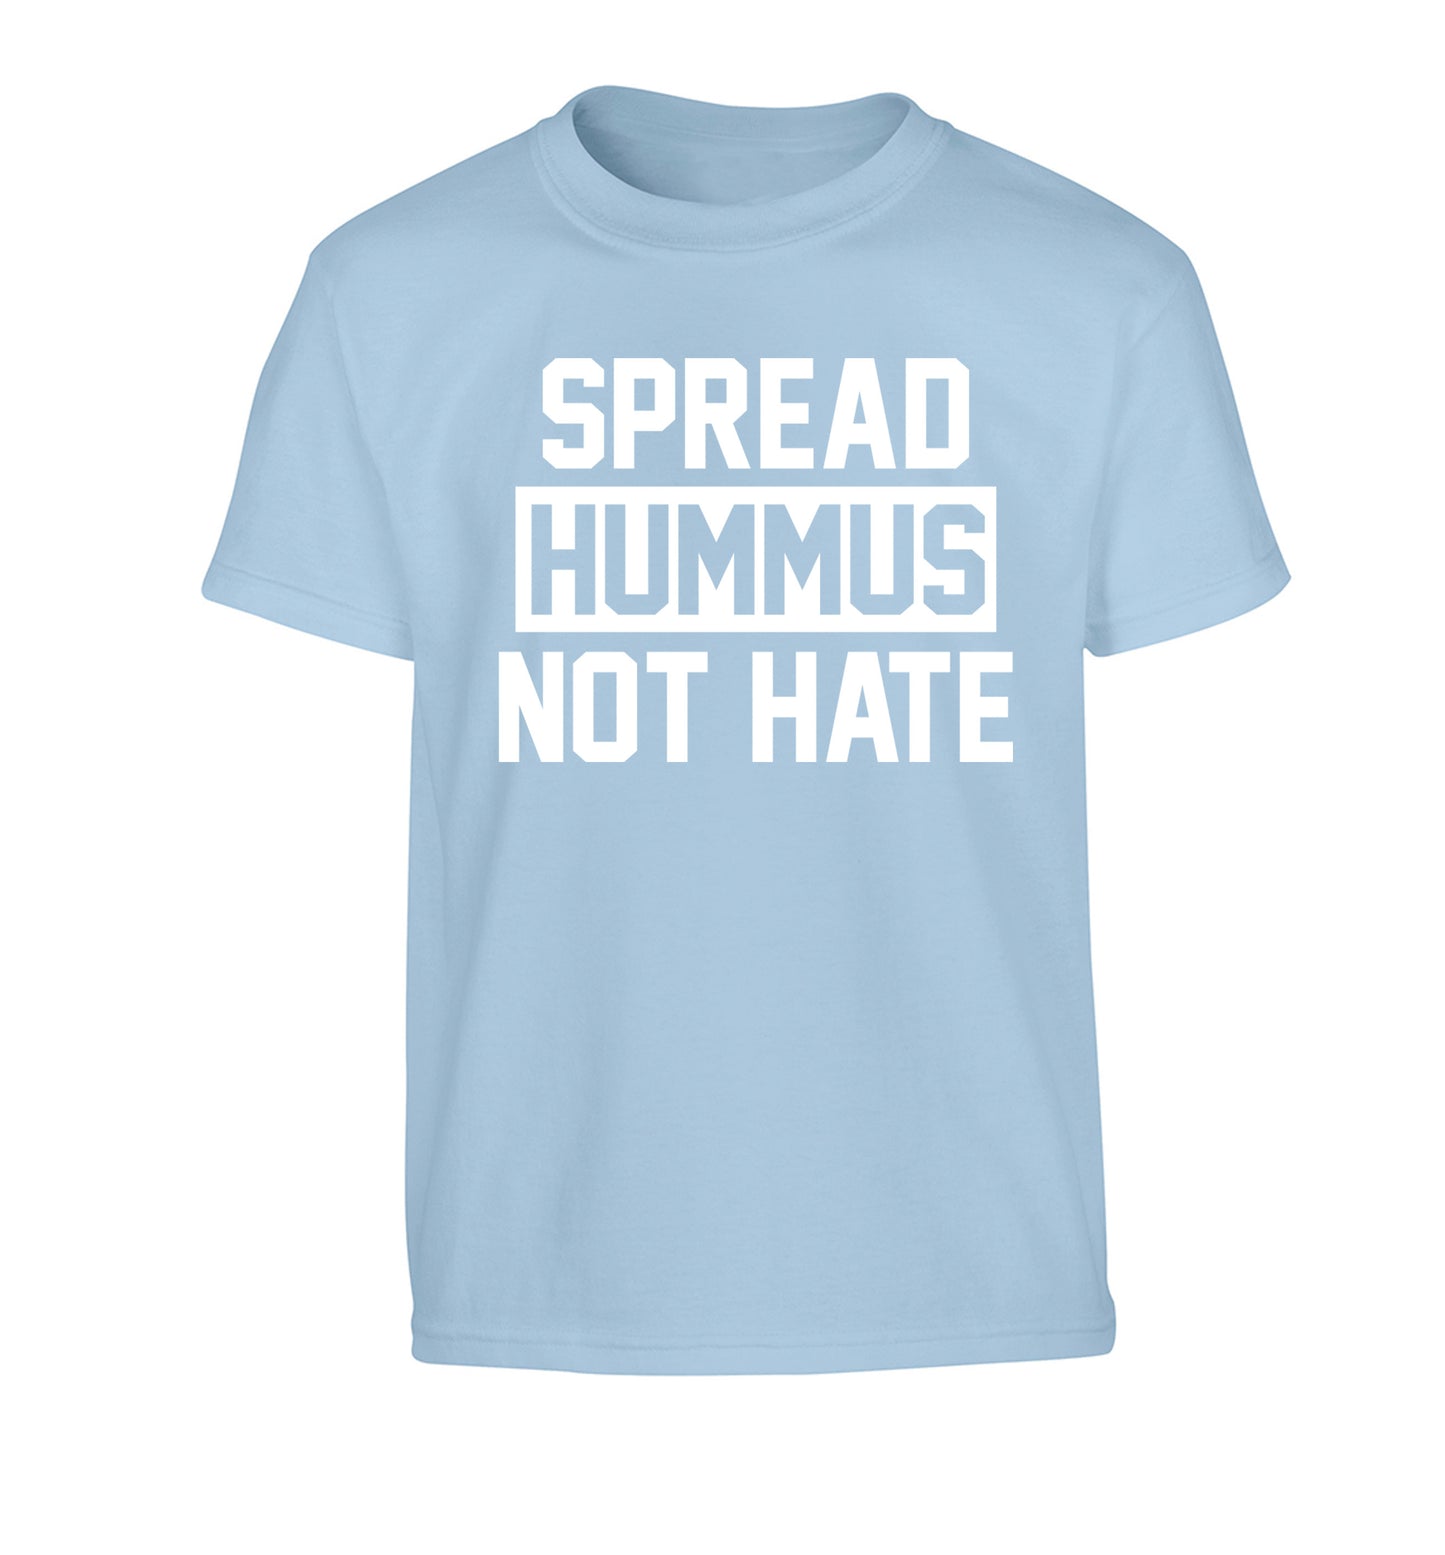 Spread hummus not hate Children's light blue Tshirt 12-14 Years